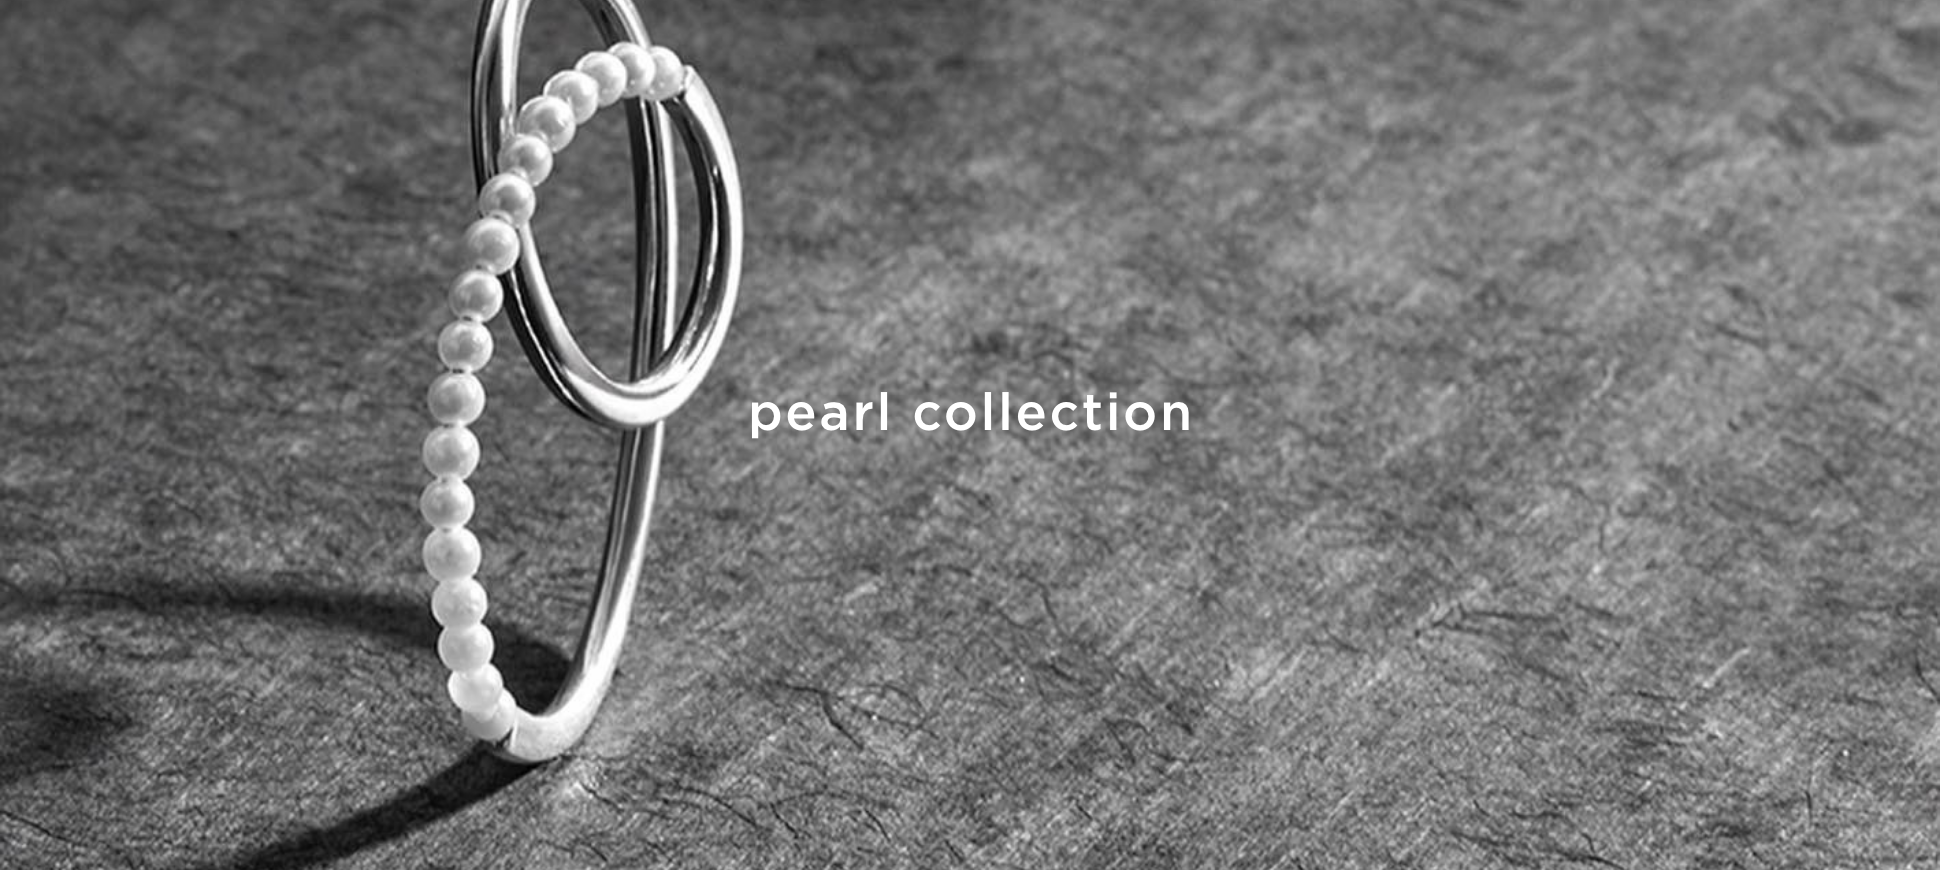 pearl collection 2022 | ブランイリス 公式ストア